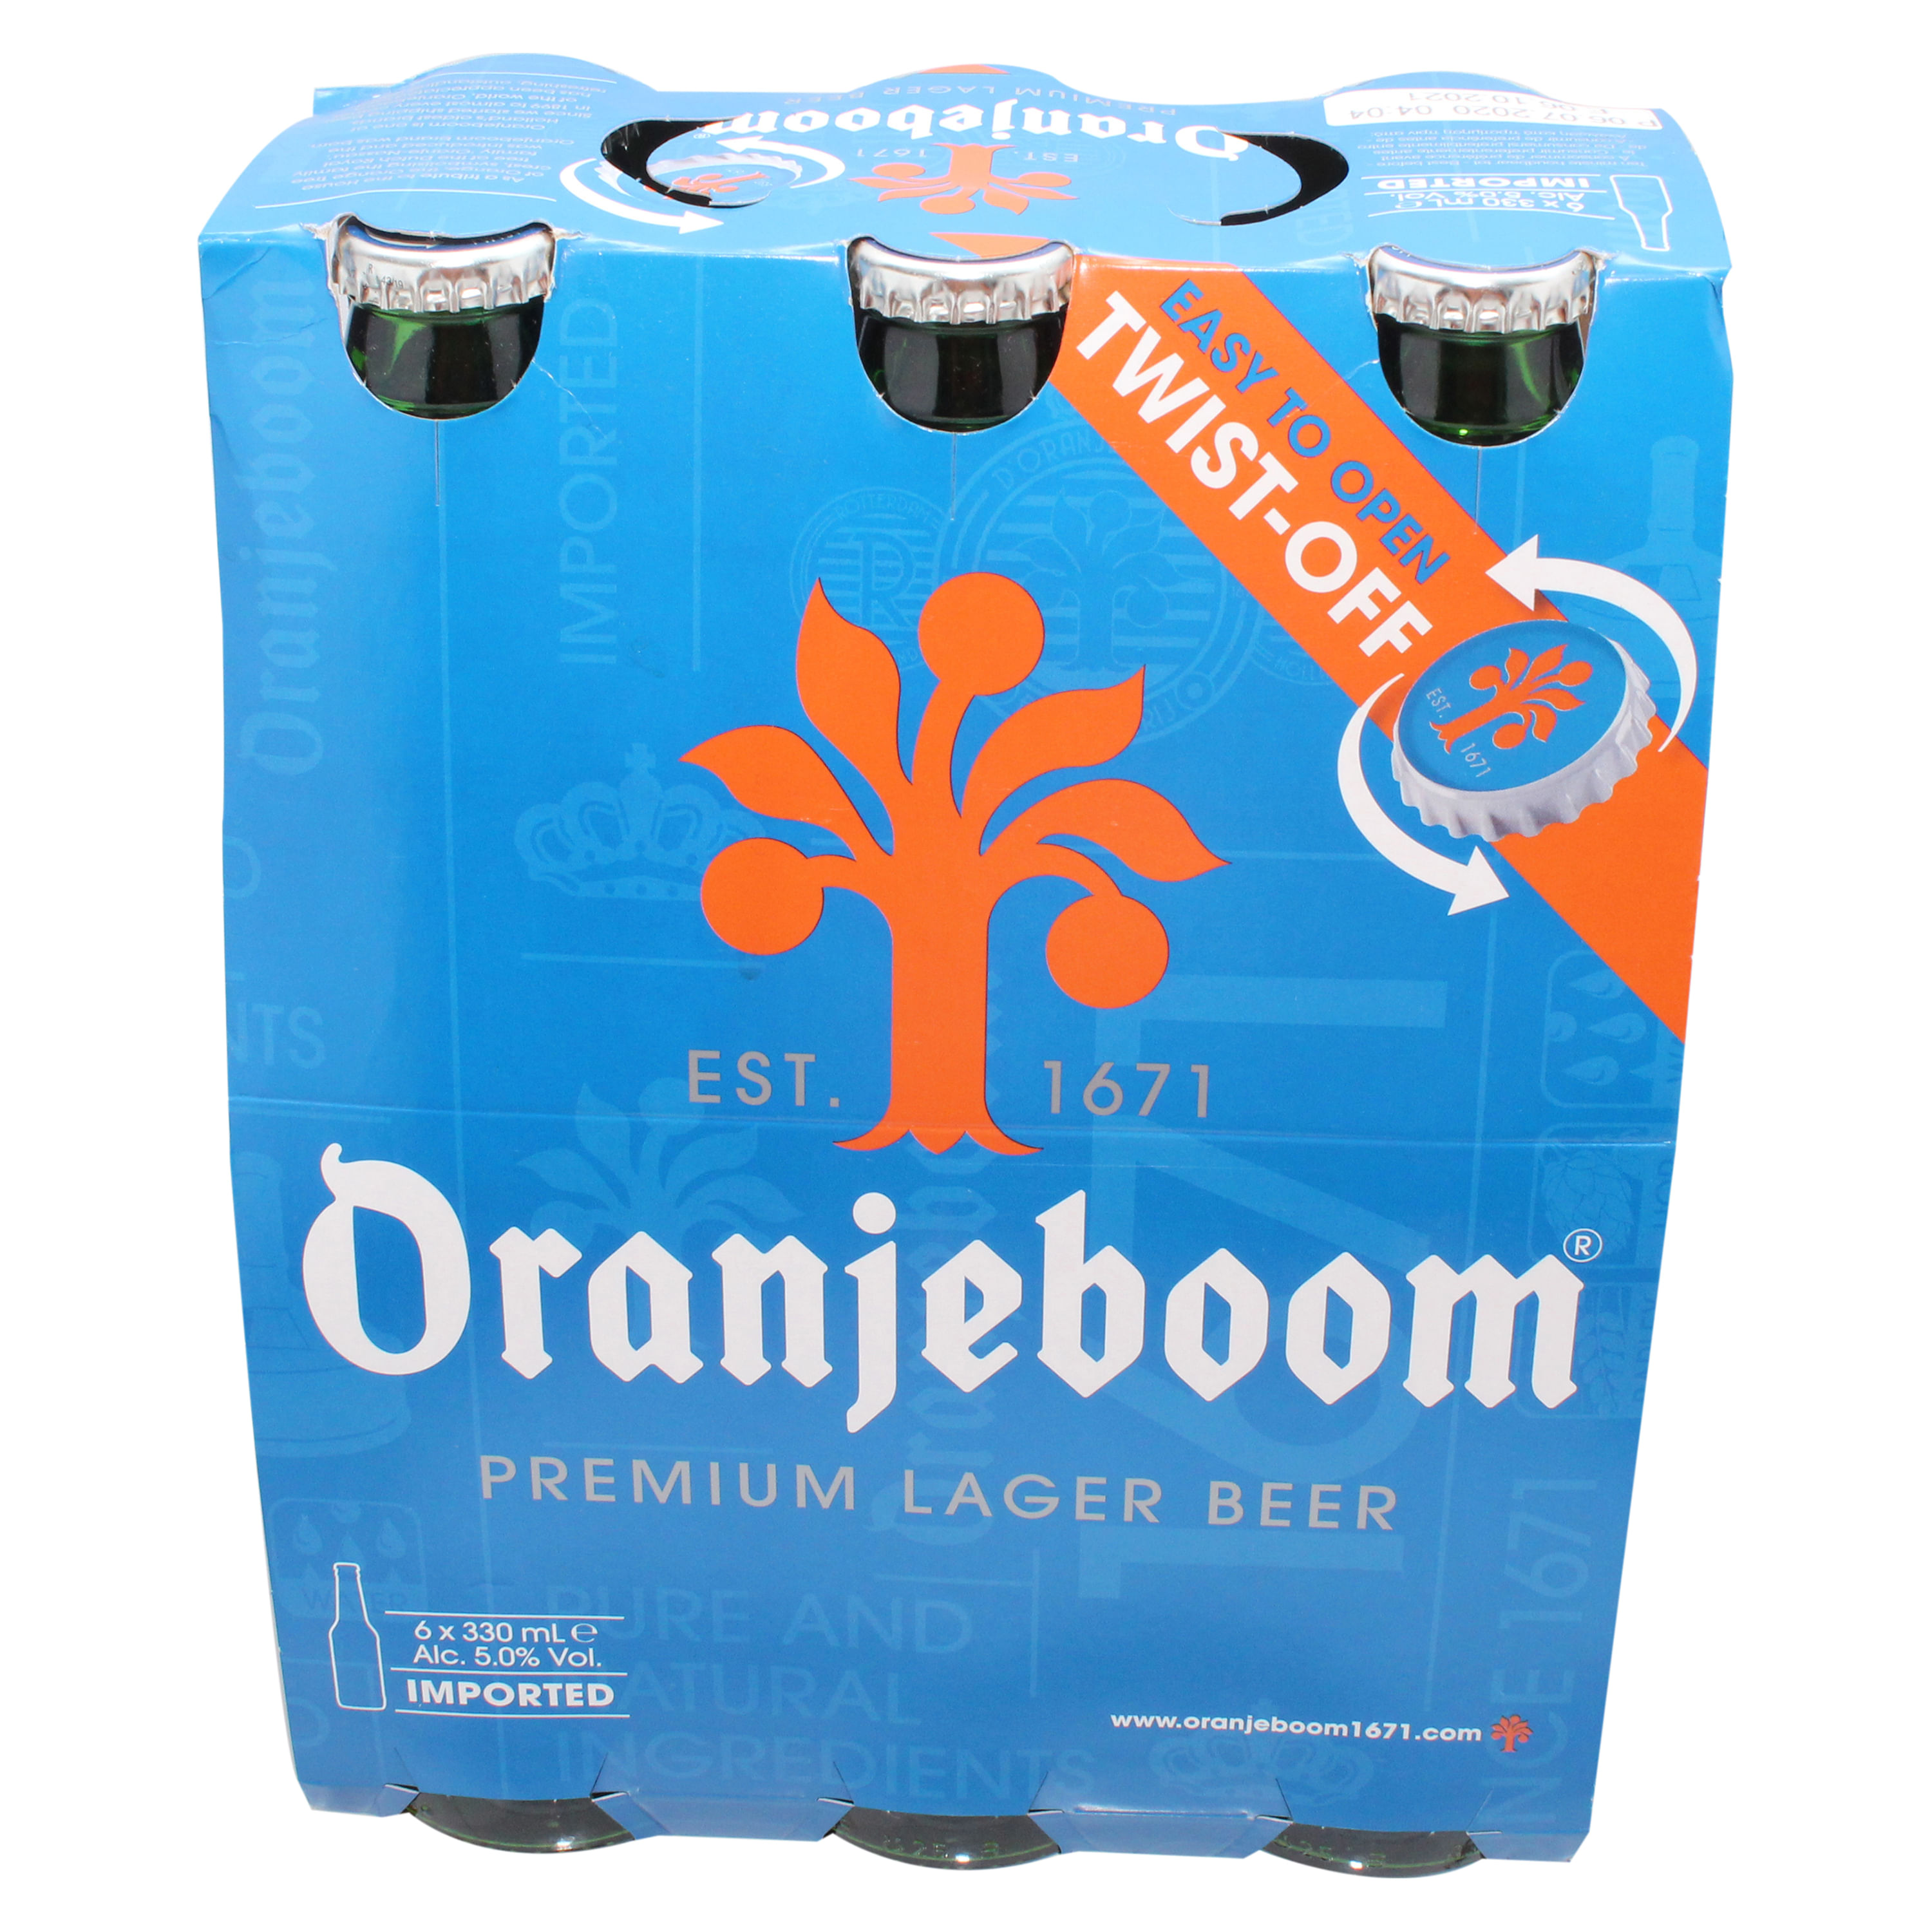 Cerveza-Oranjeboom-Lager-Bot-6Pk-1980Ml-1-4567